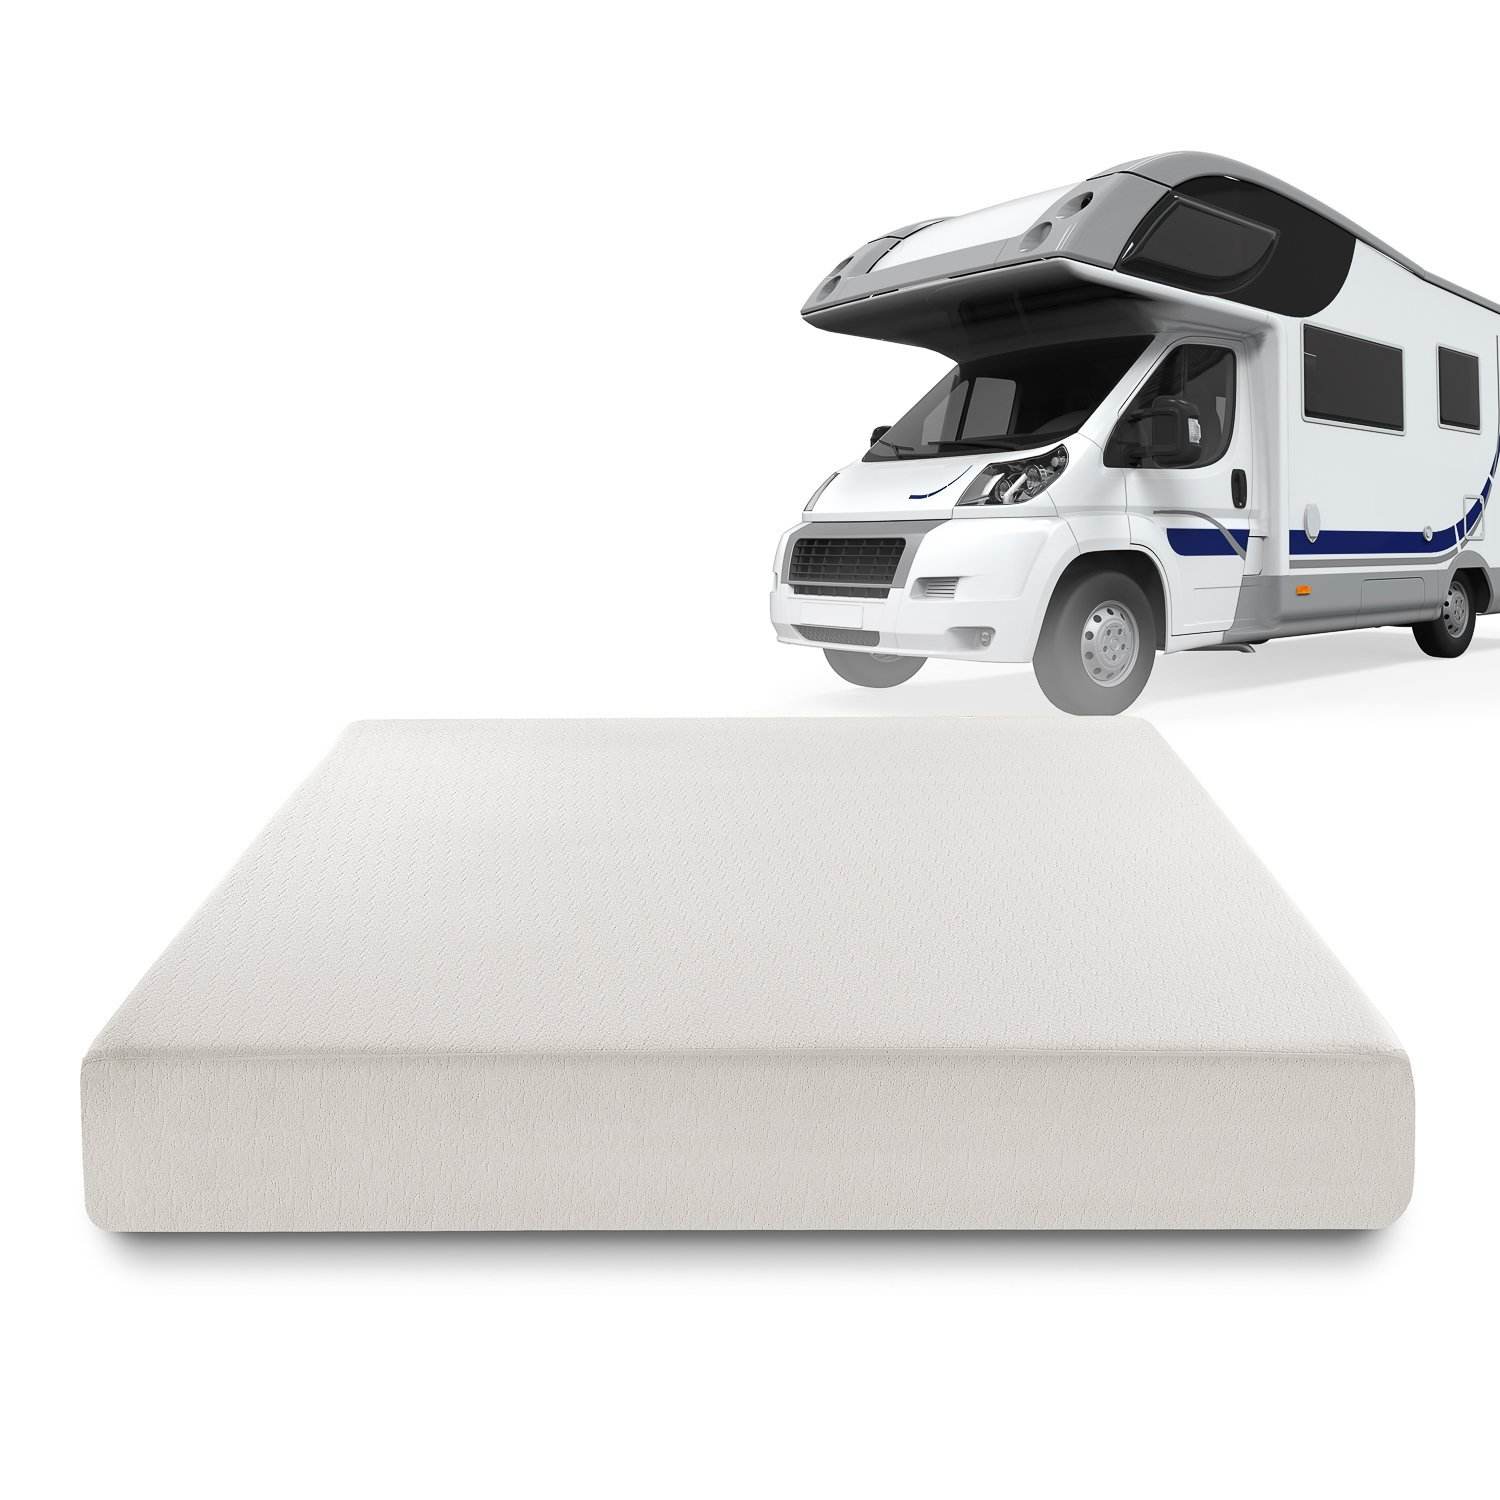 Zinus Sleep Master Deluxe RV:Camper:Trailer:Truck Memory Foam Mattress